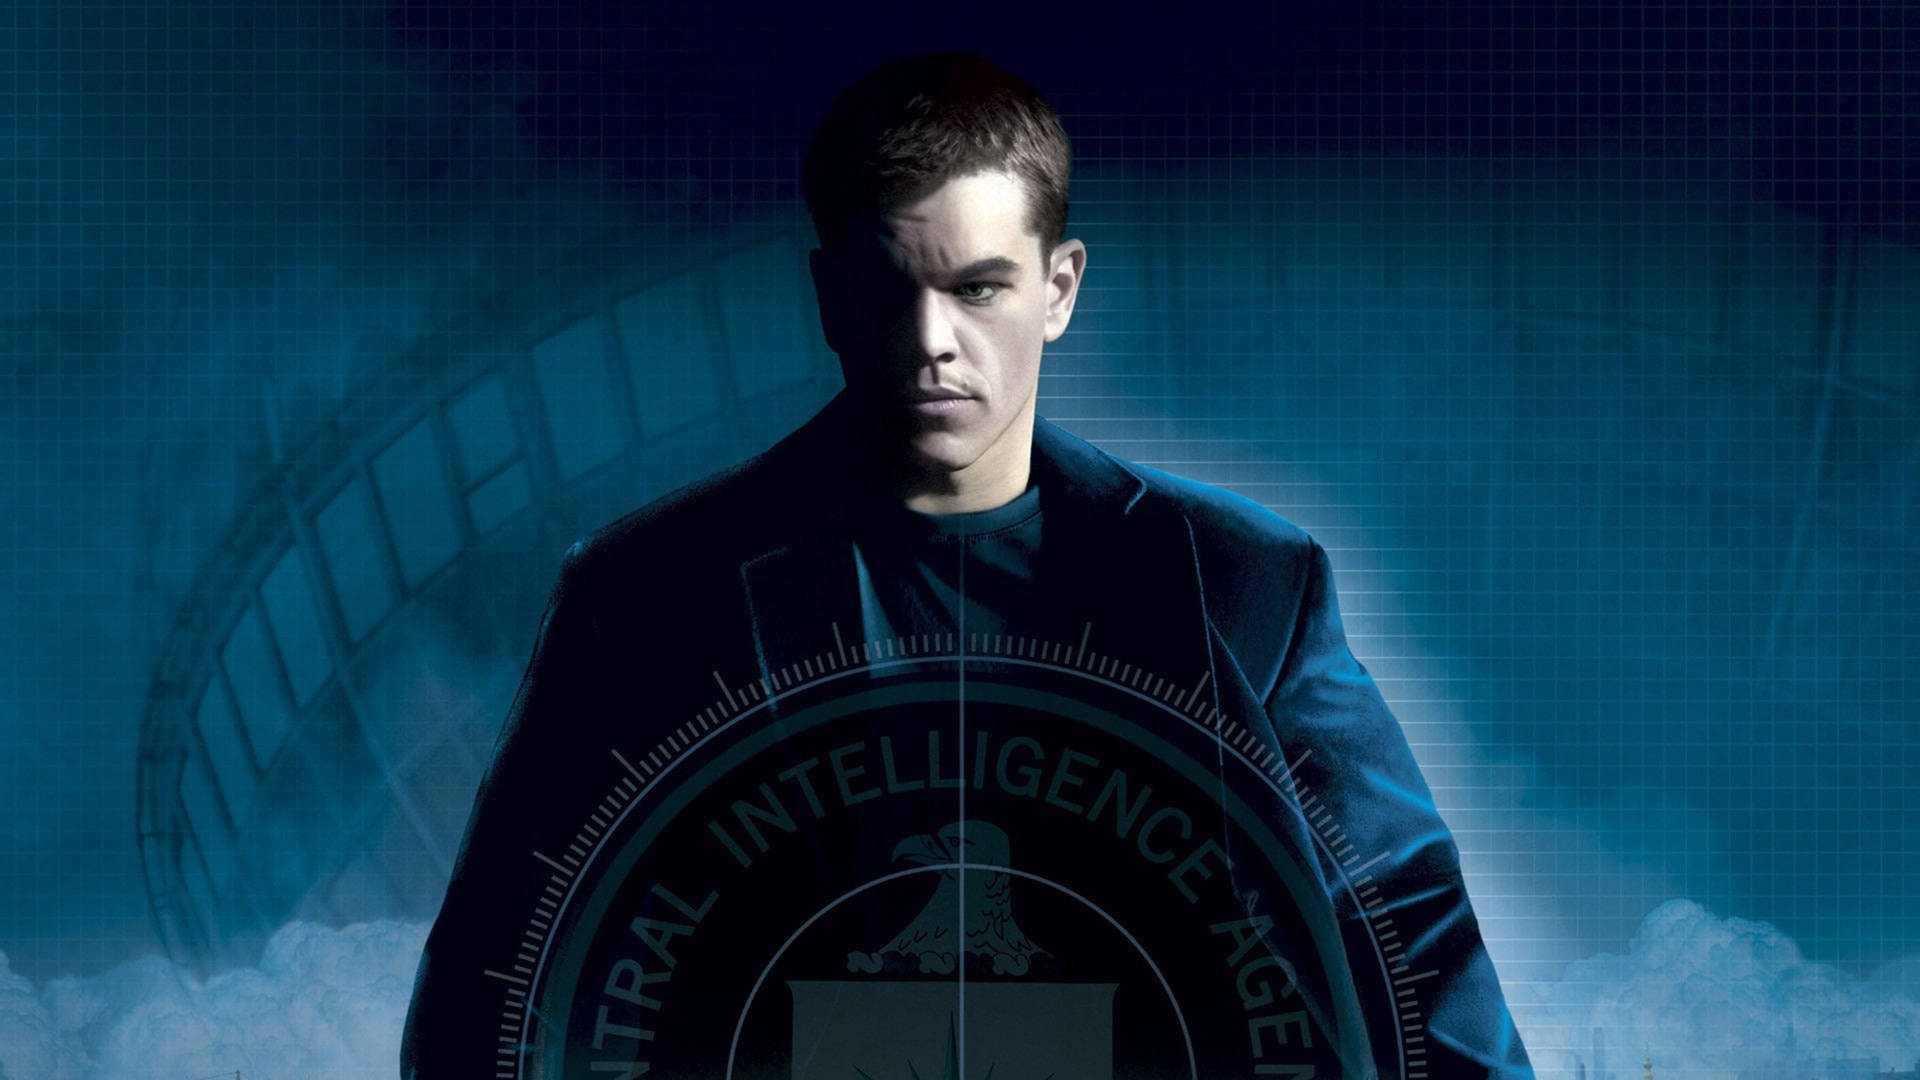 Bourne Actor Matt Damon Background